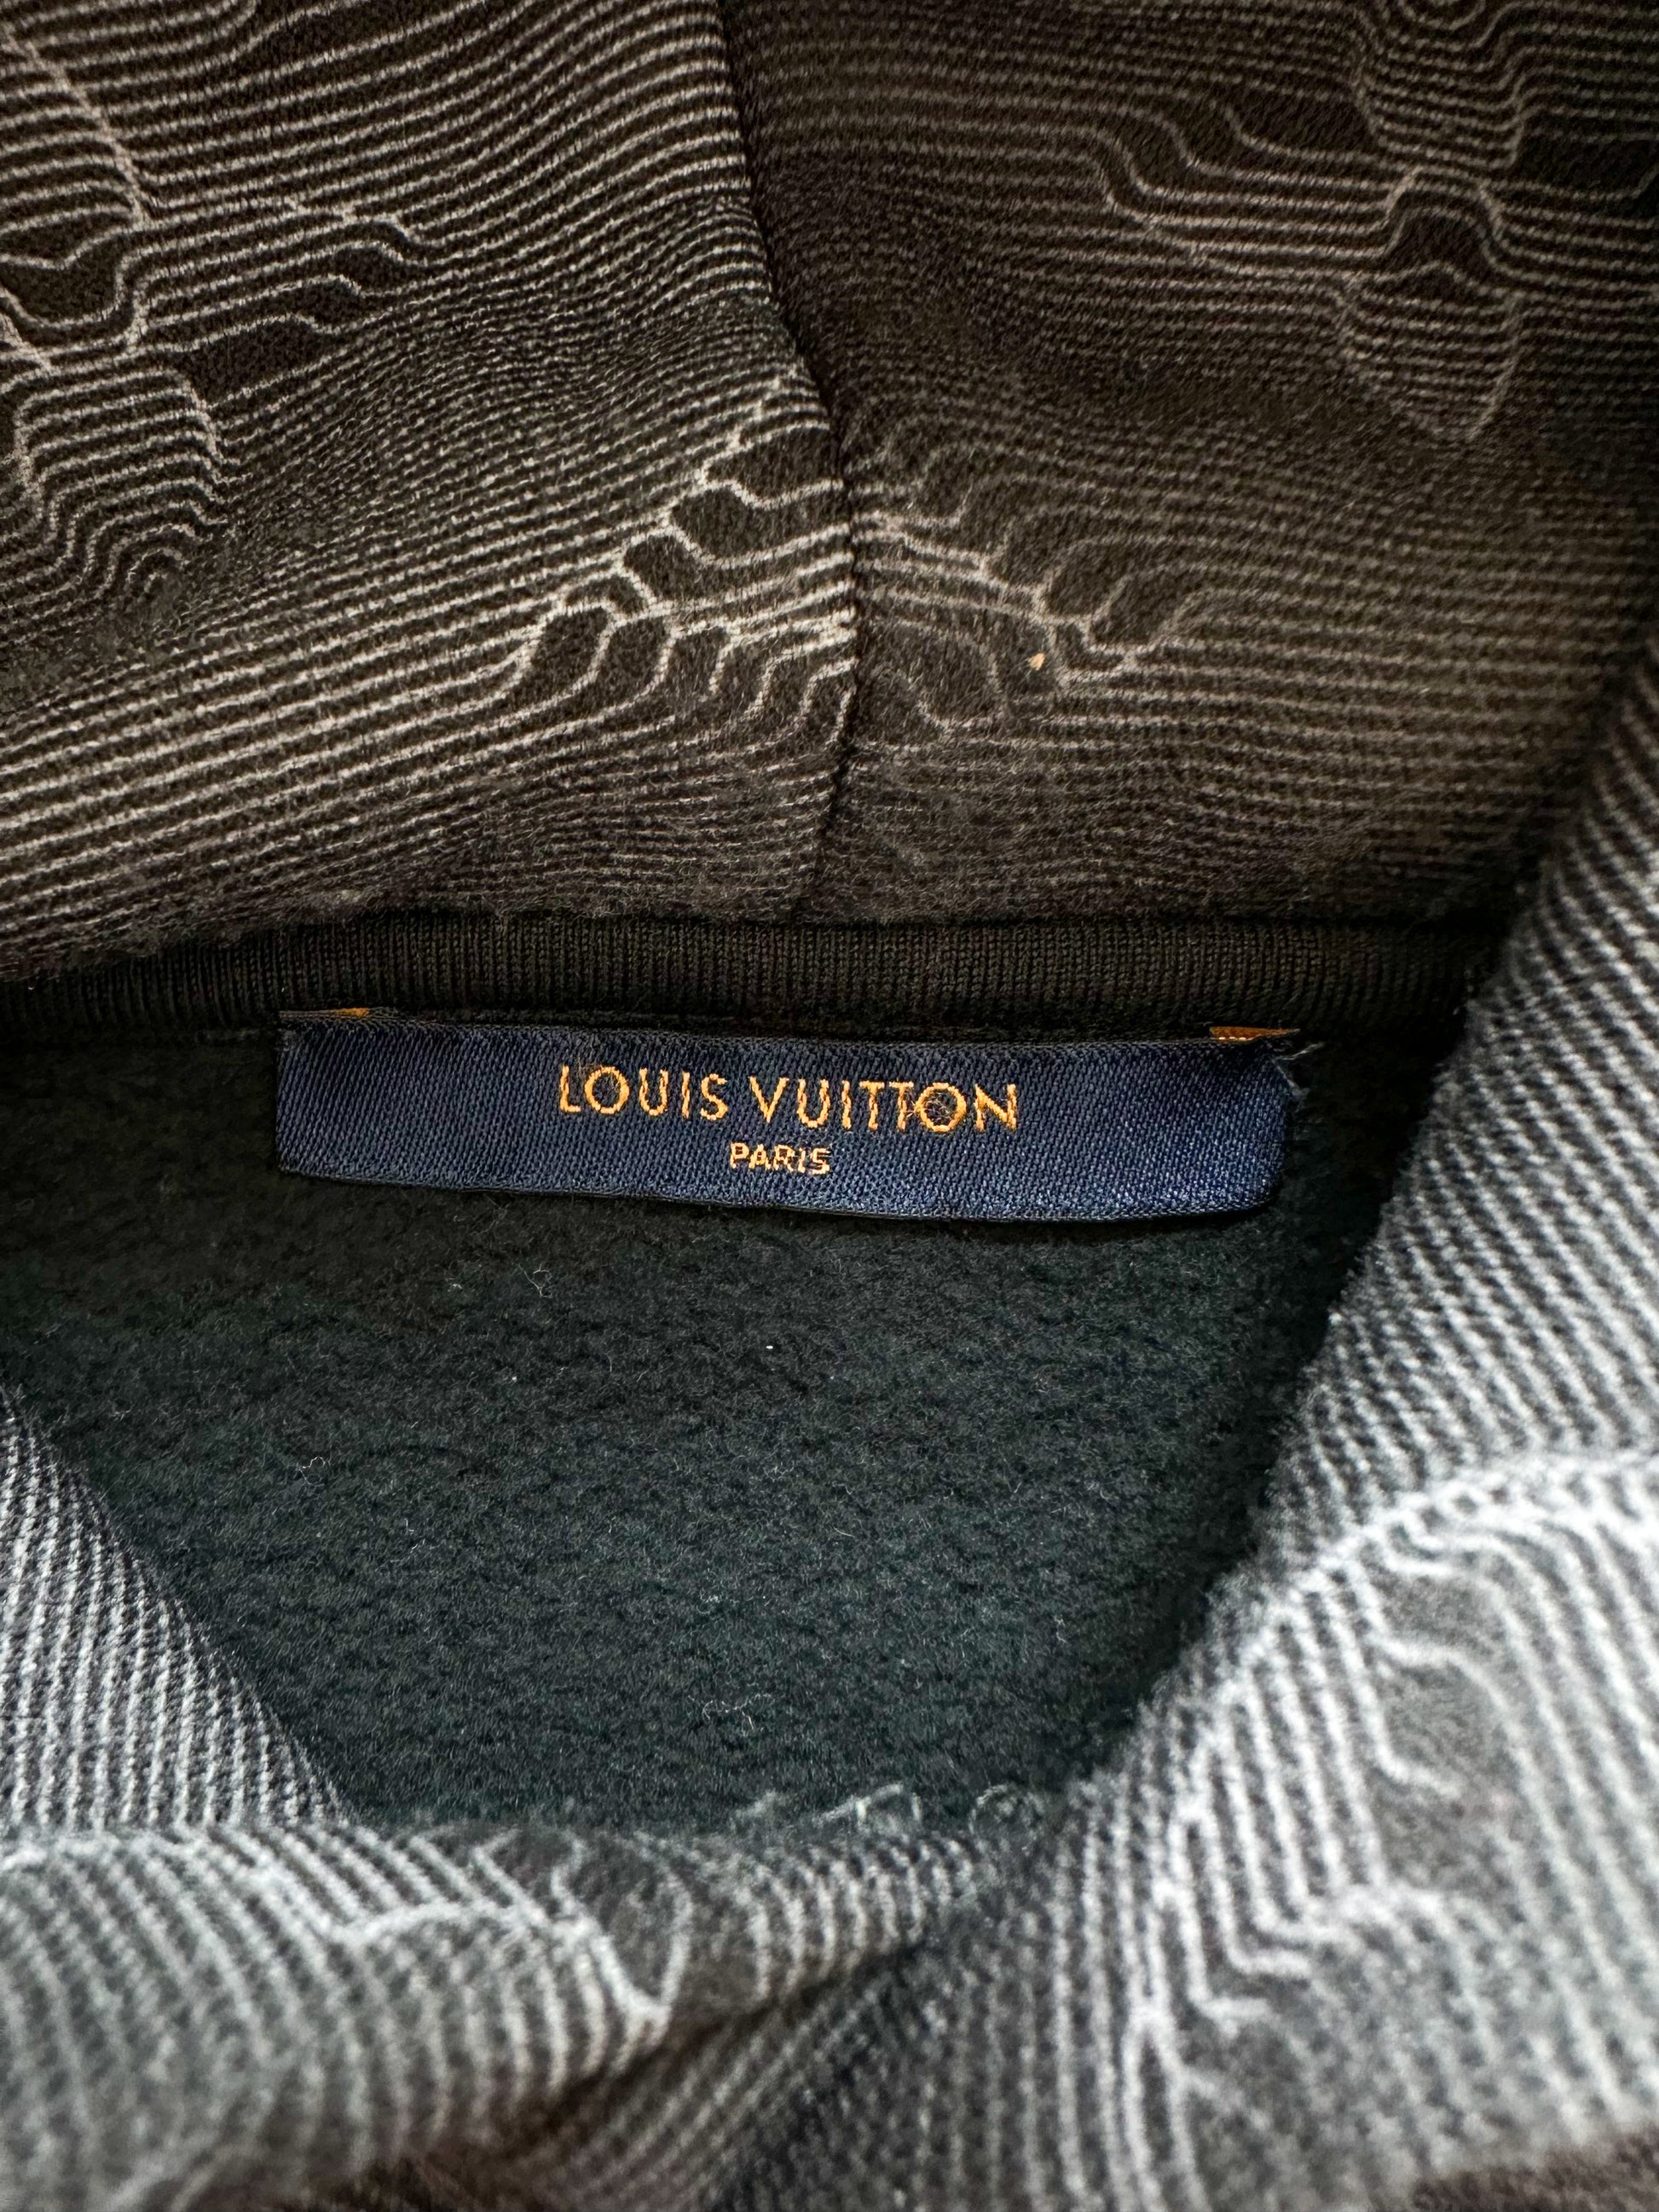 NEW Louis Vuitton Fashion Hoodies For Men-5, Replica Clothing